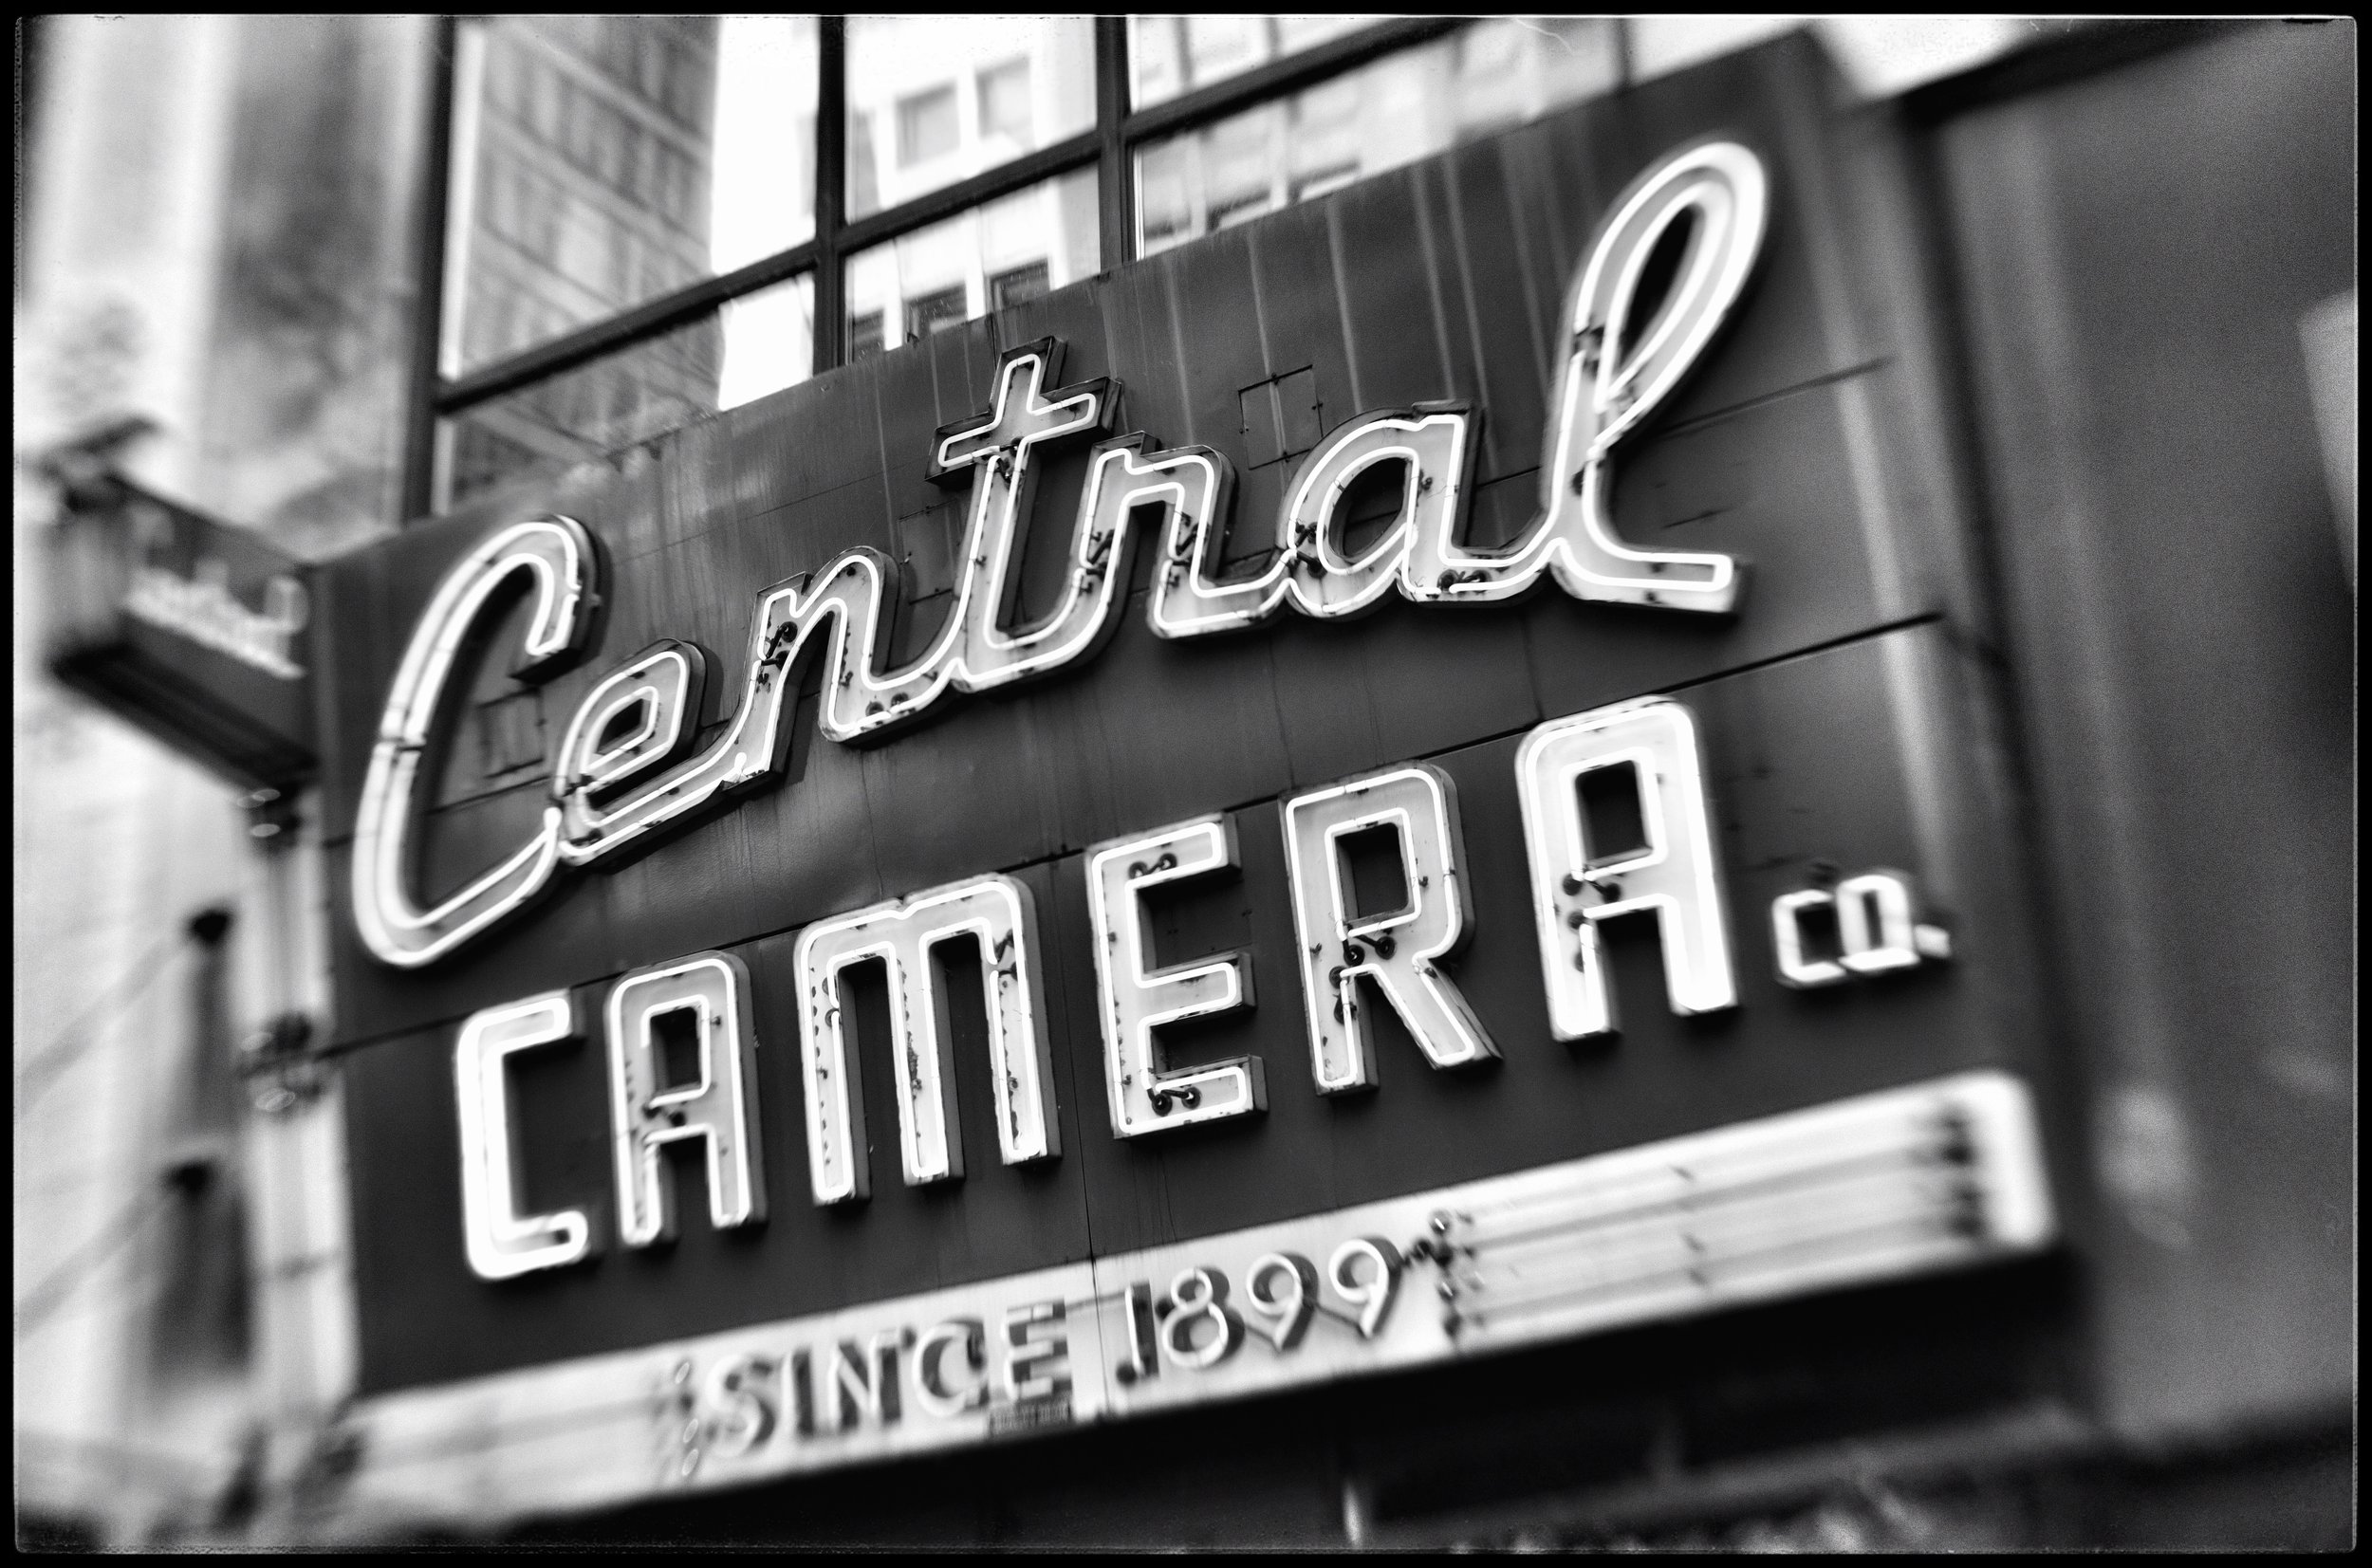 Central camera